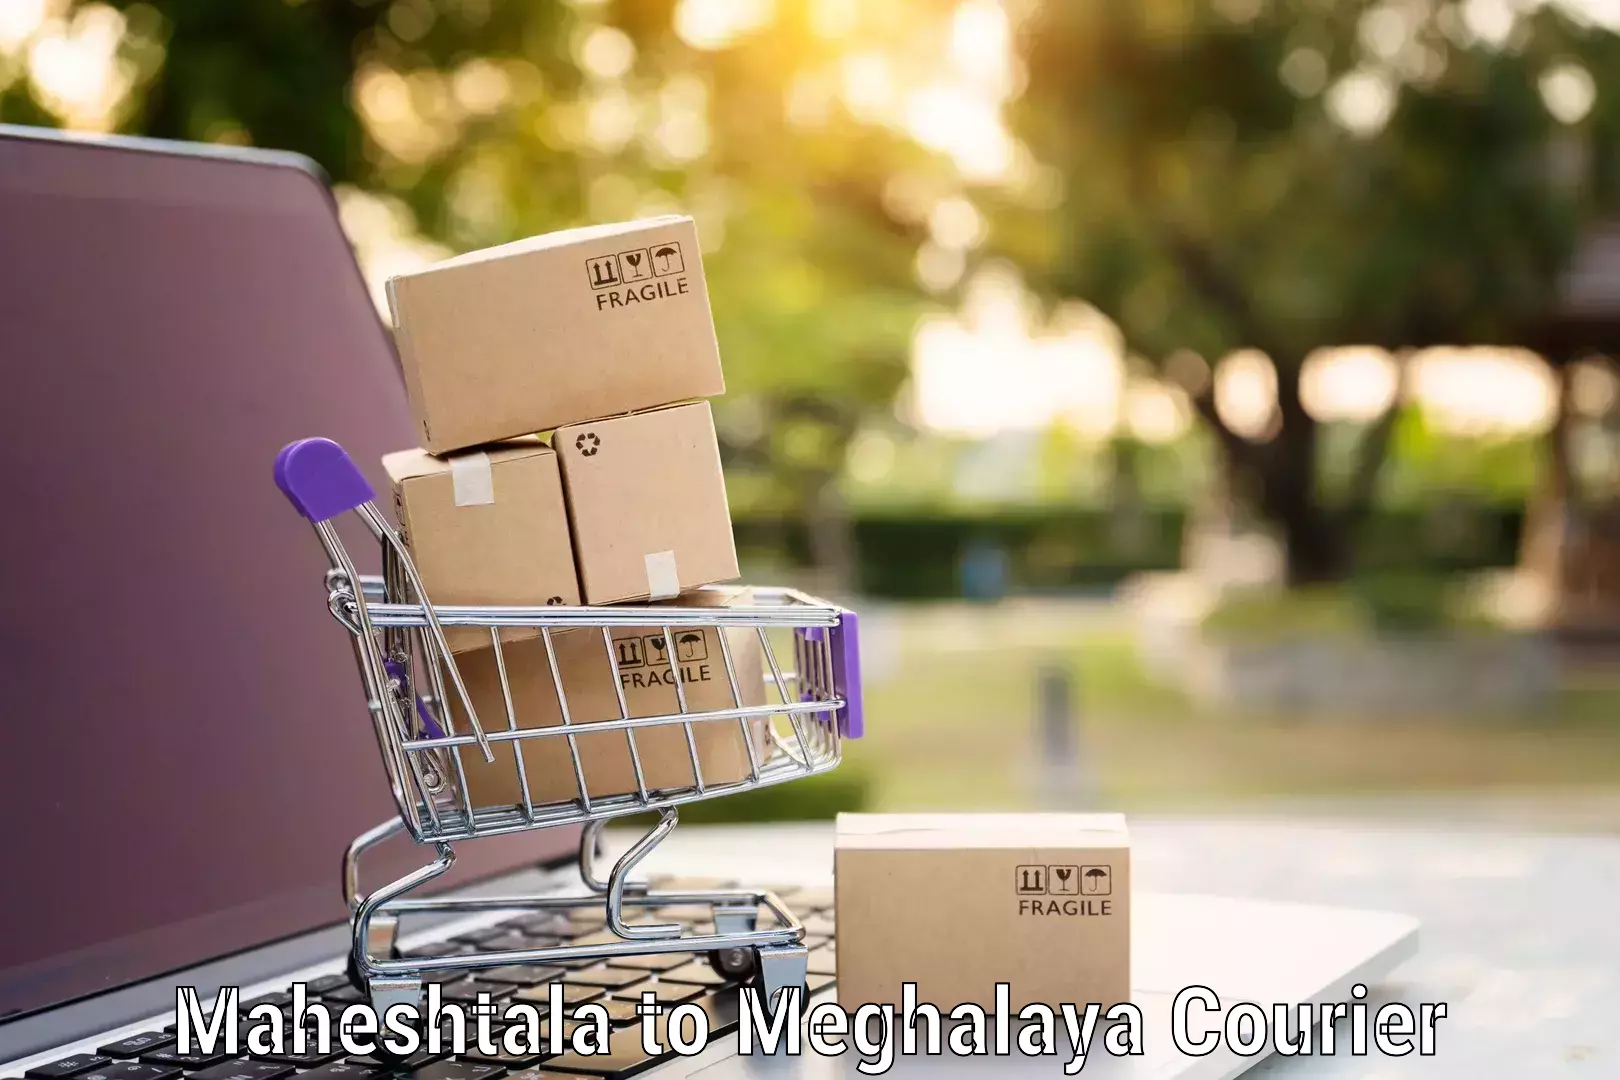 Home relocation services in Maheshtala to Meghalaya